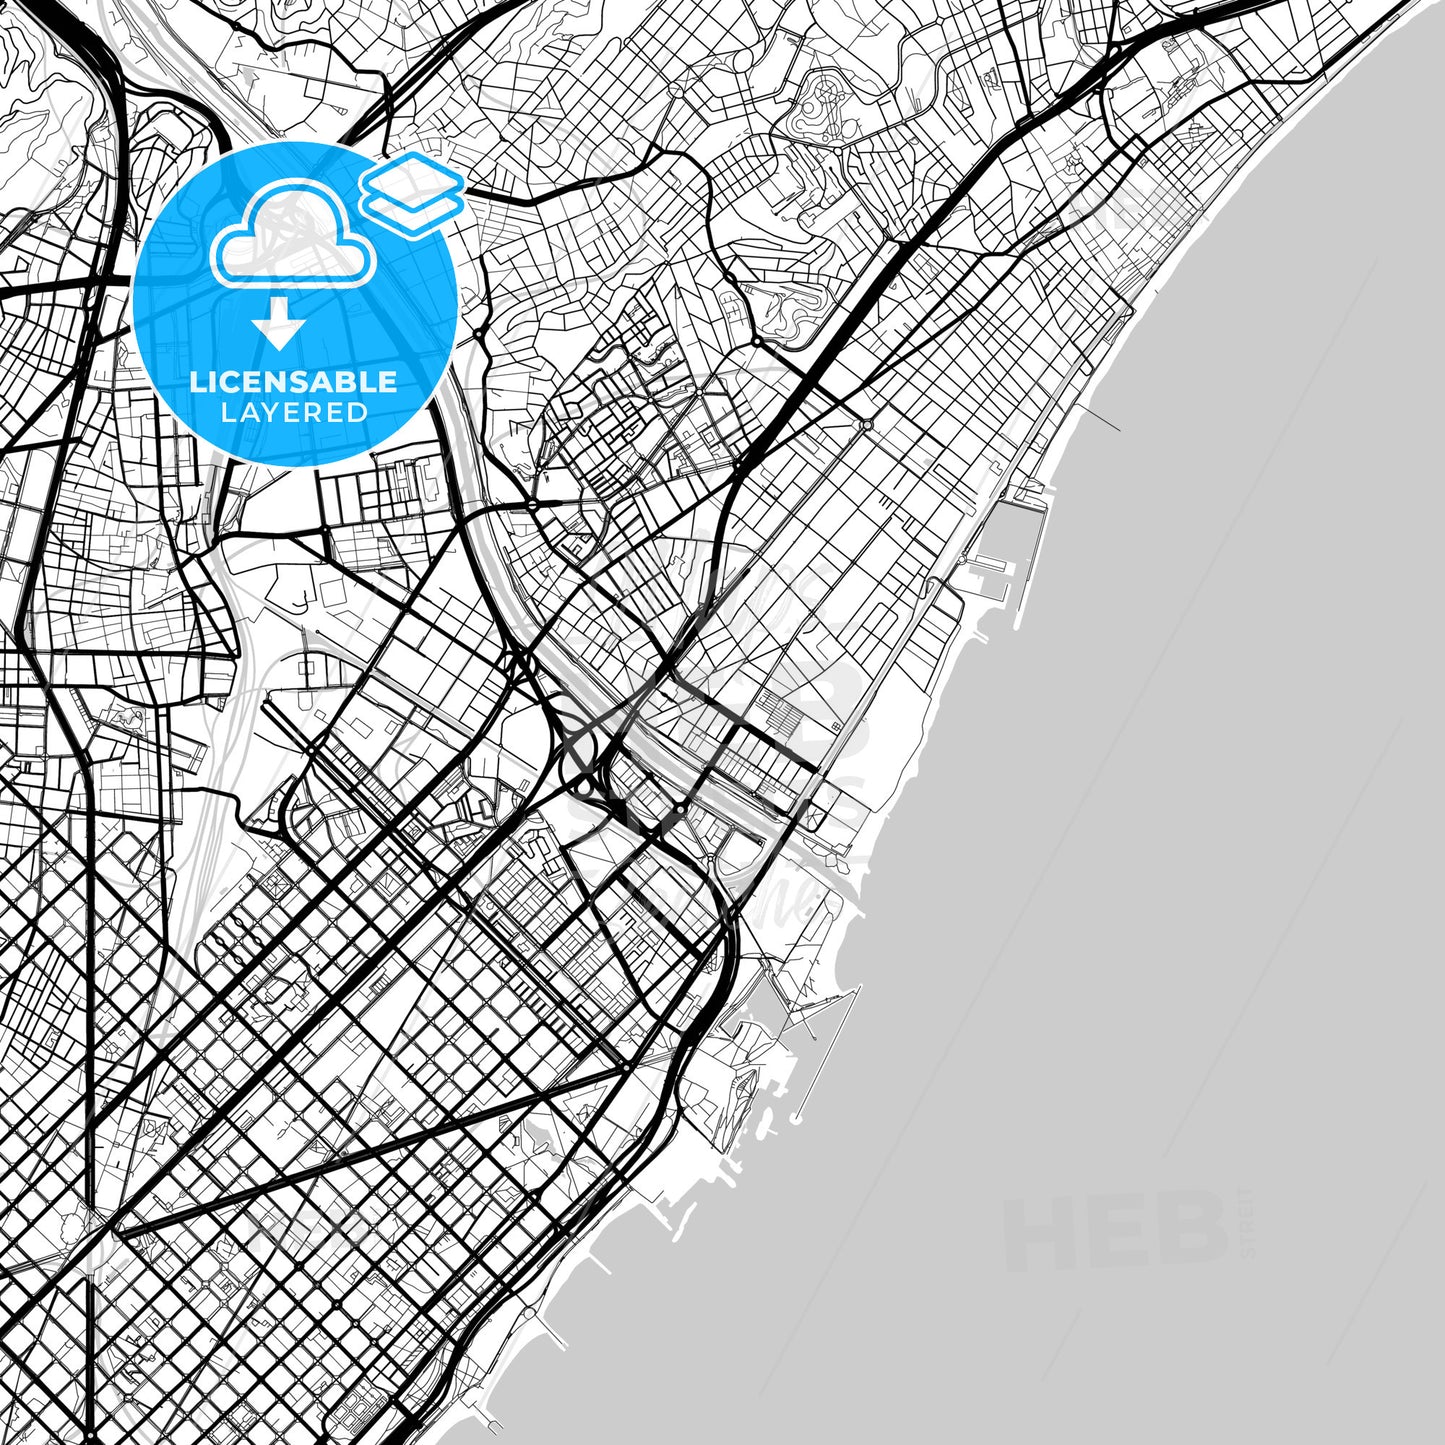 Layered PDF map of Sant Adrià de Besòs, Barcelona, Spain